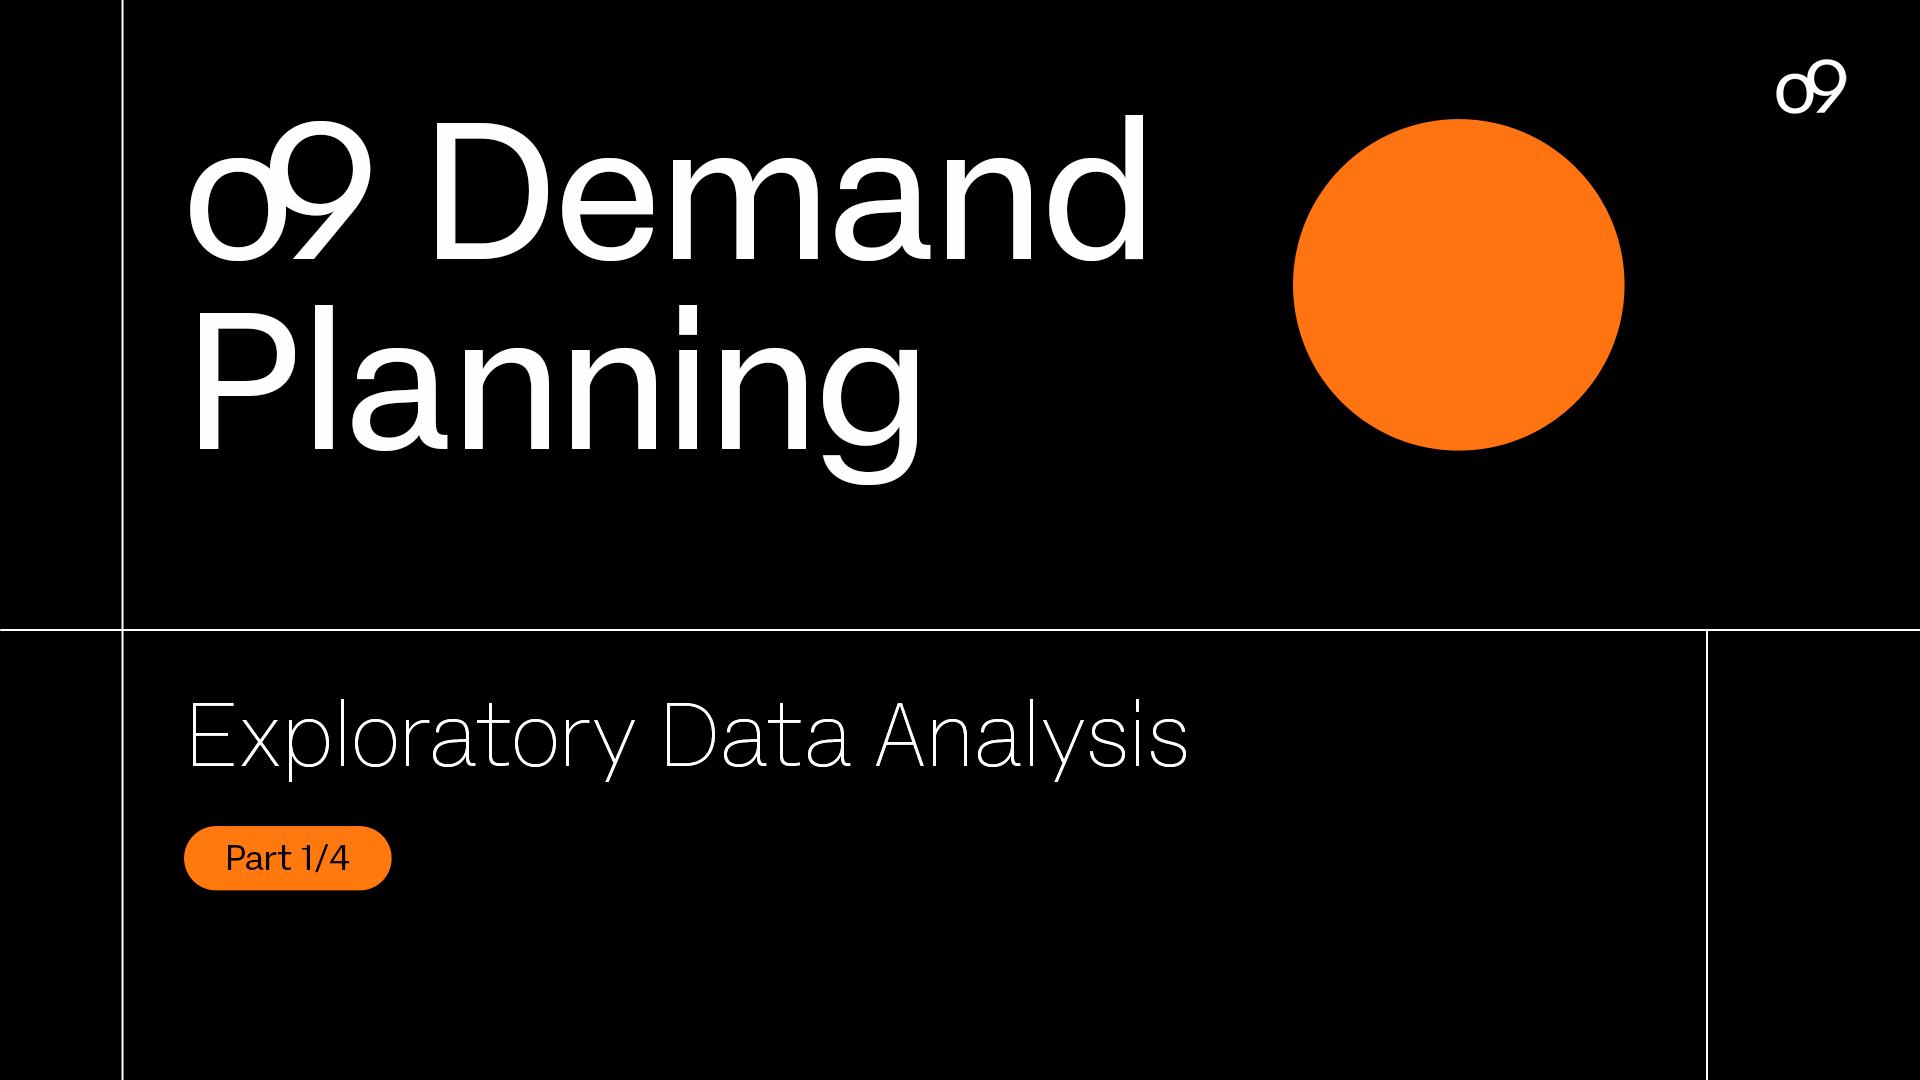 O9 demand planning exploratory data analysis